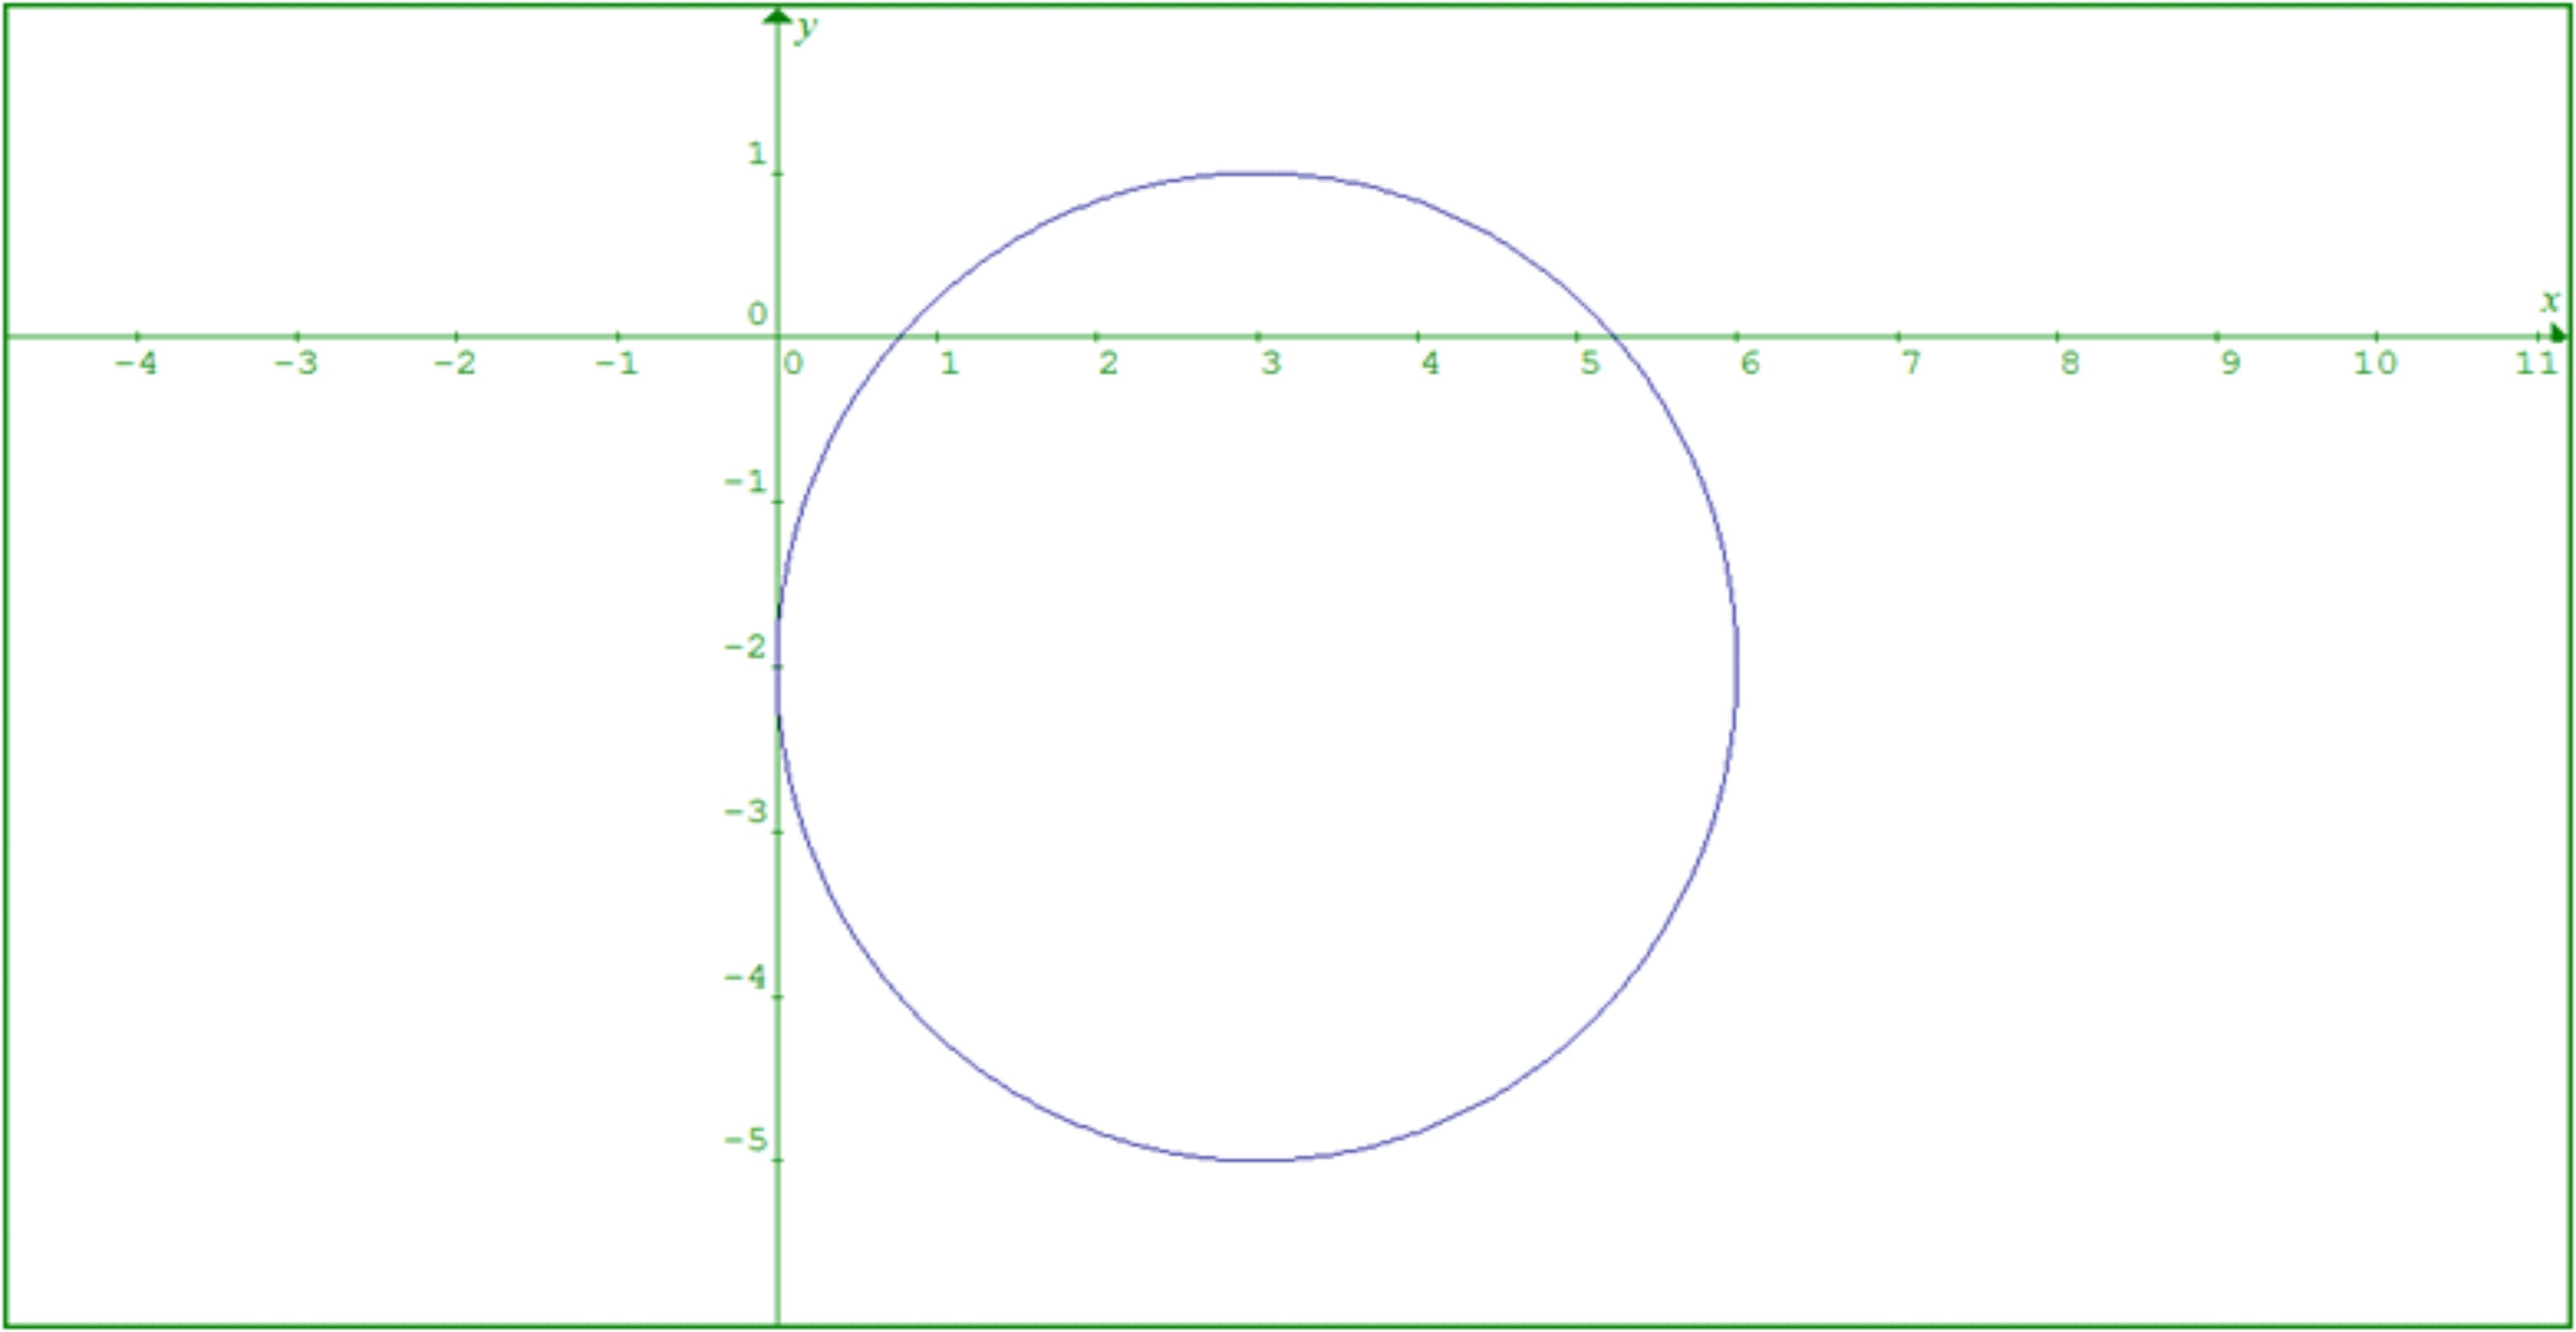 makalah matematika tentang persamaan lingkaran